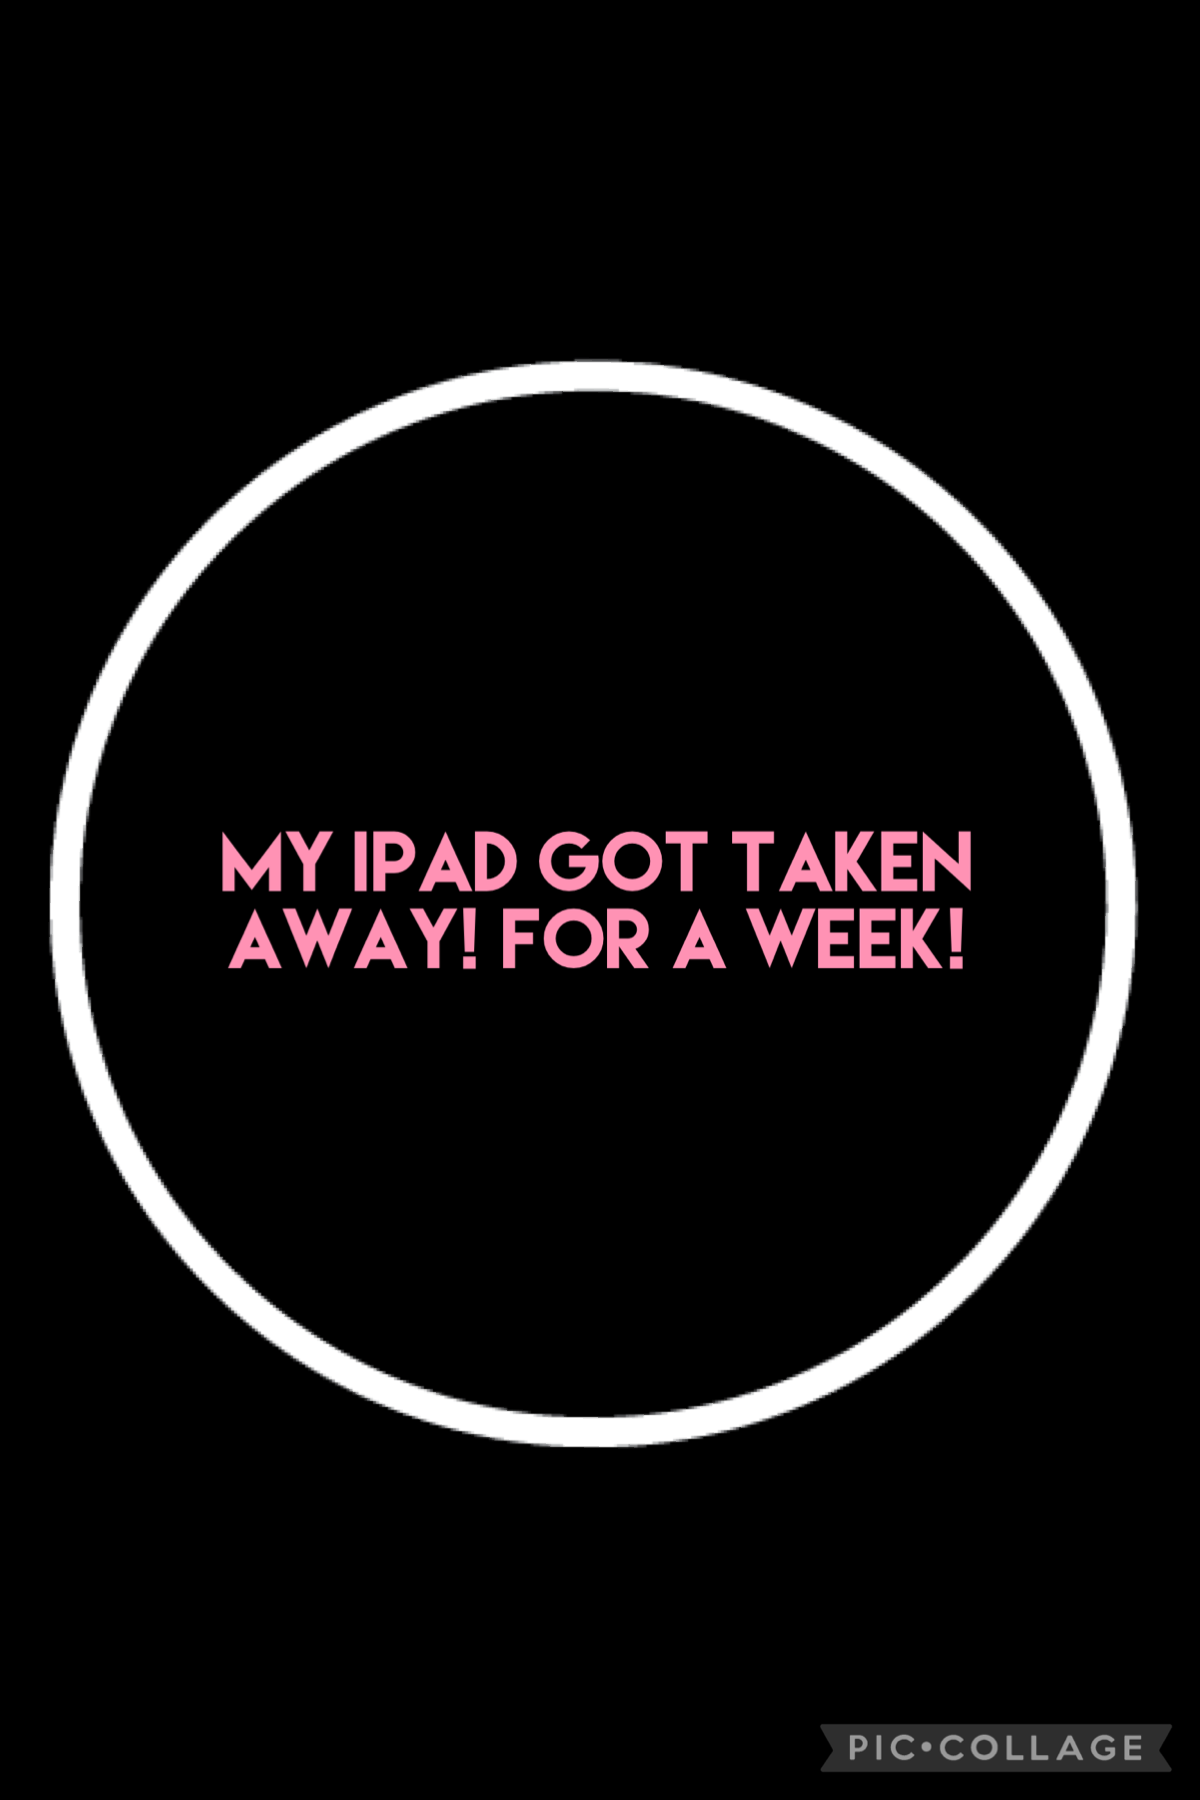 My iPad got taken away!